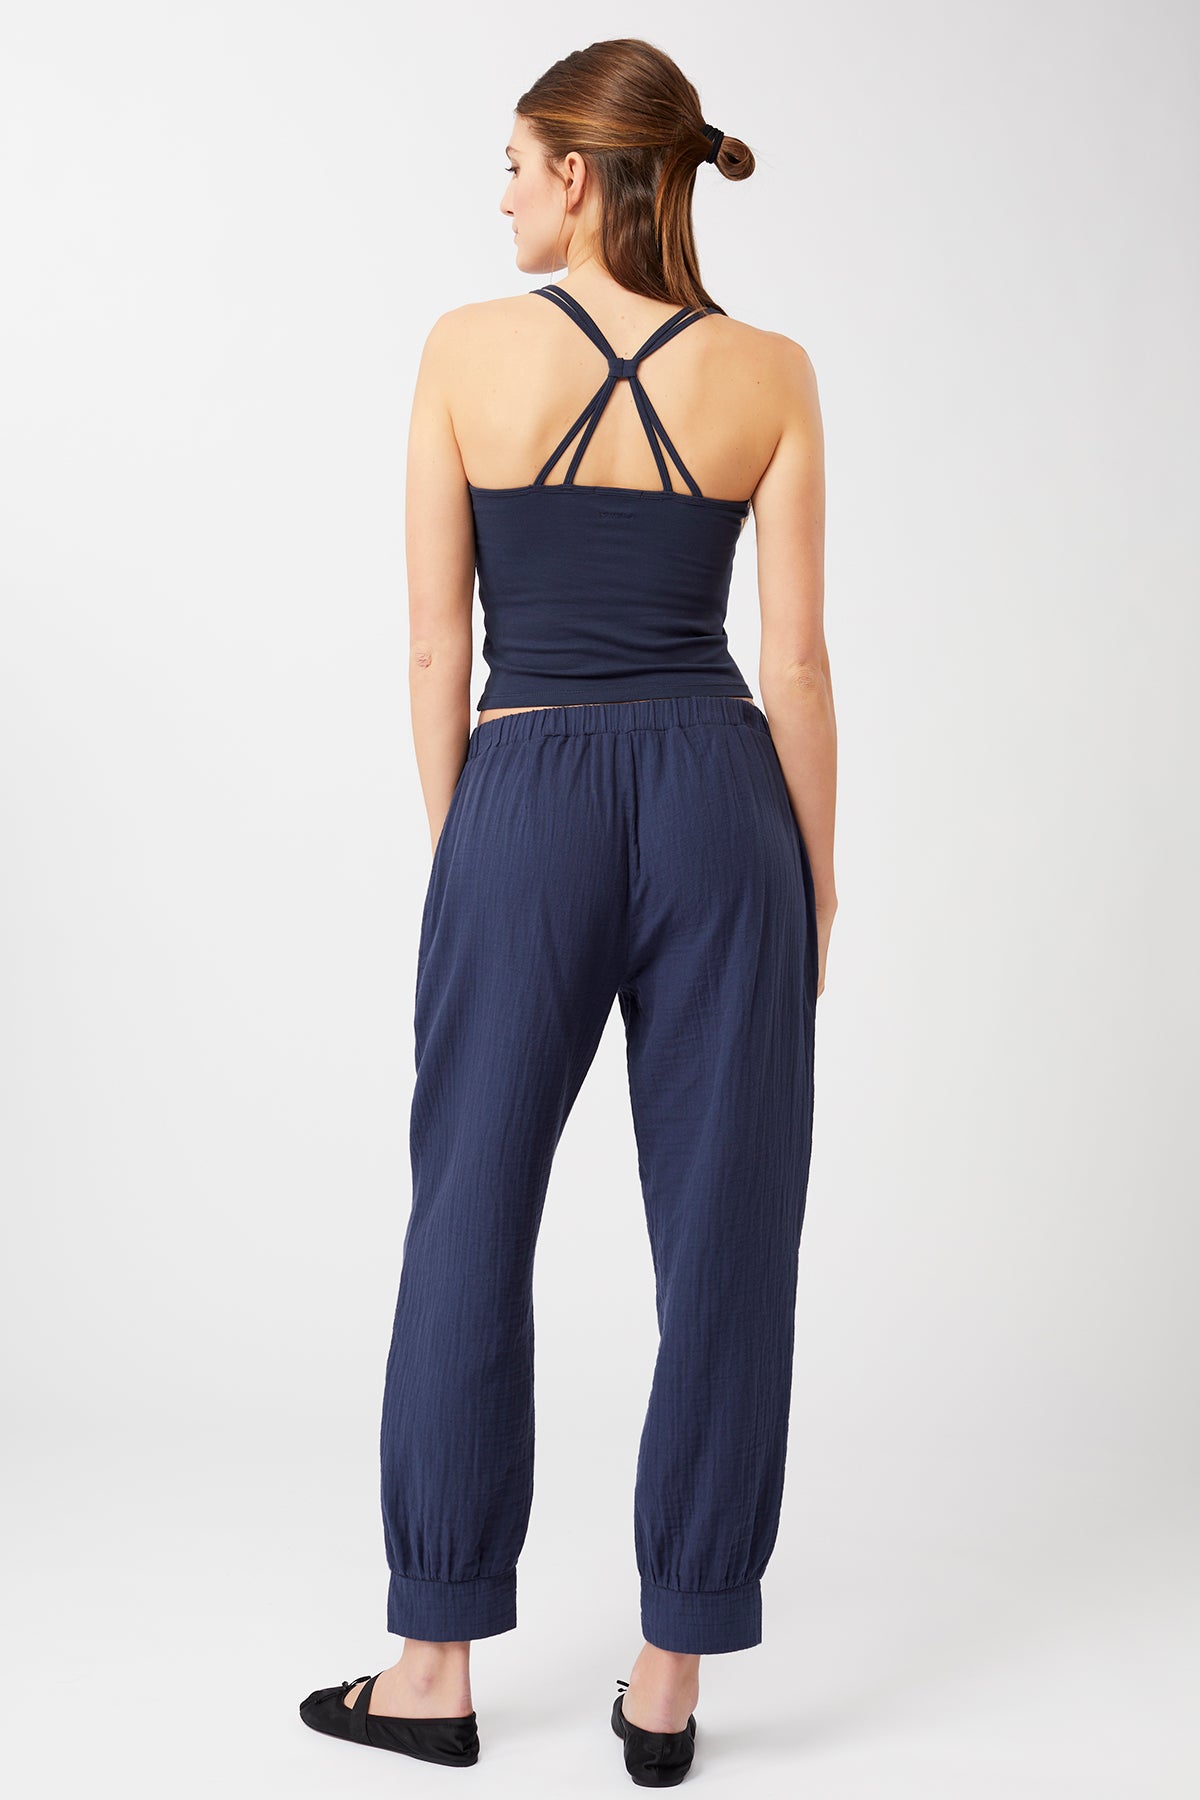 Mandala Yoga Pants Blau Outfit Rückseite - Milan Pants